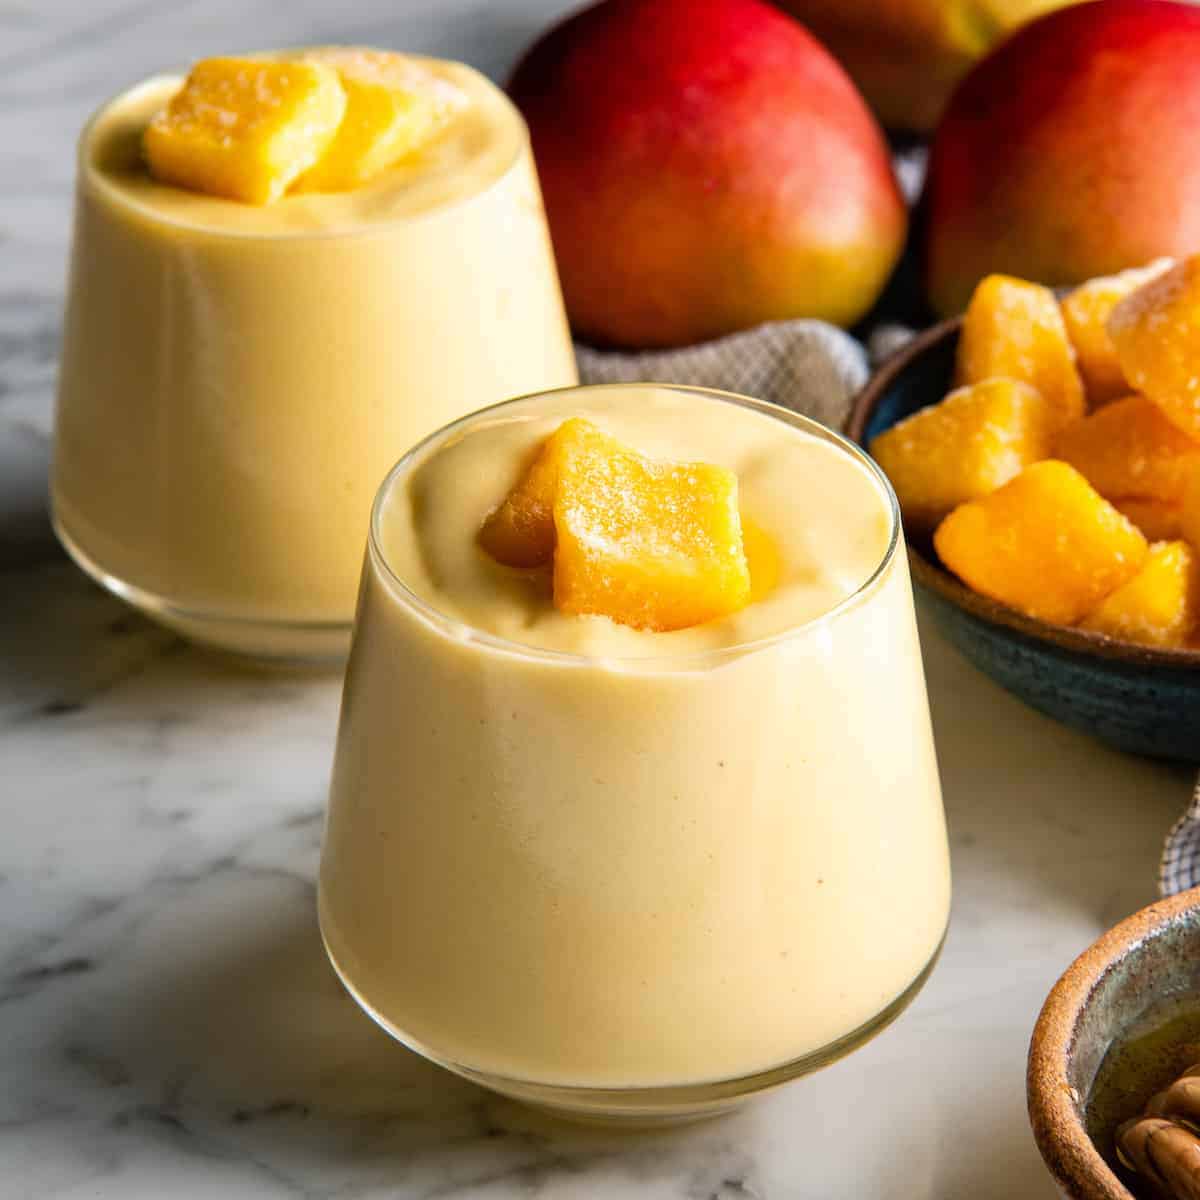 Mango smoothie recipe